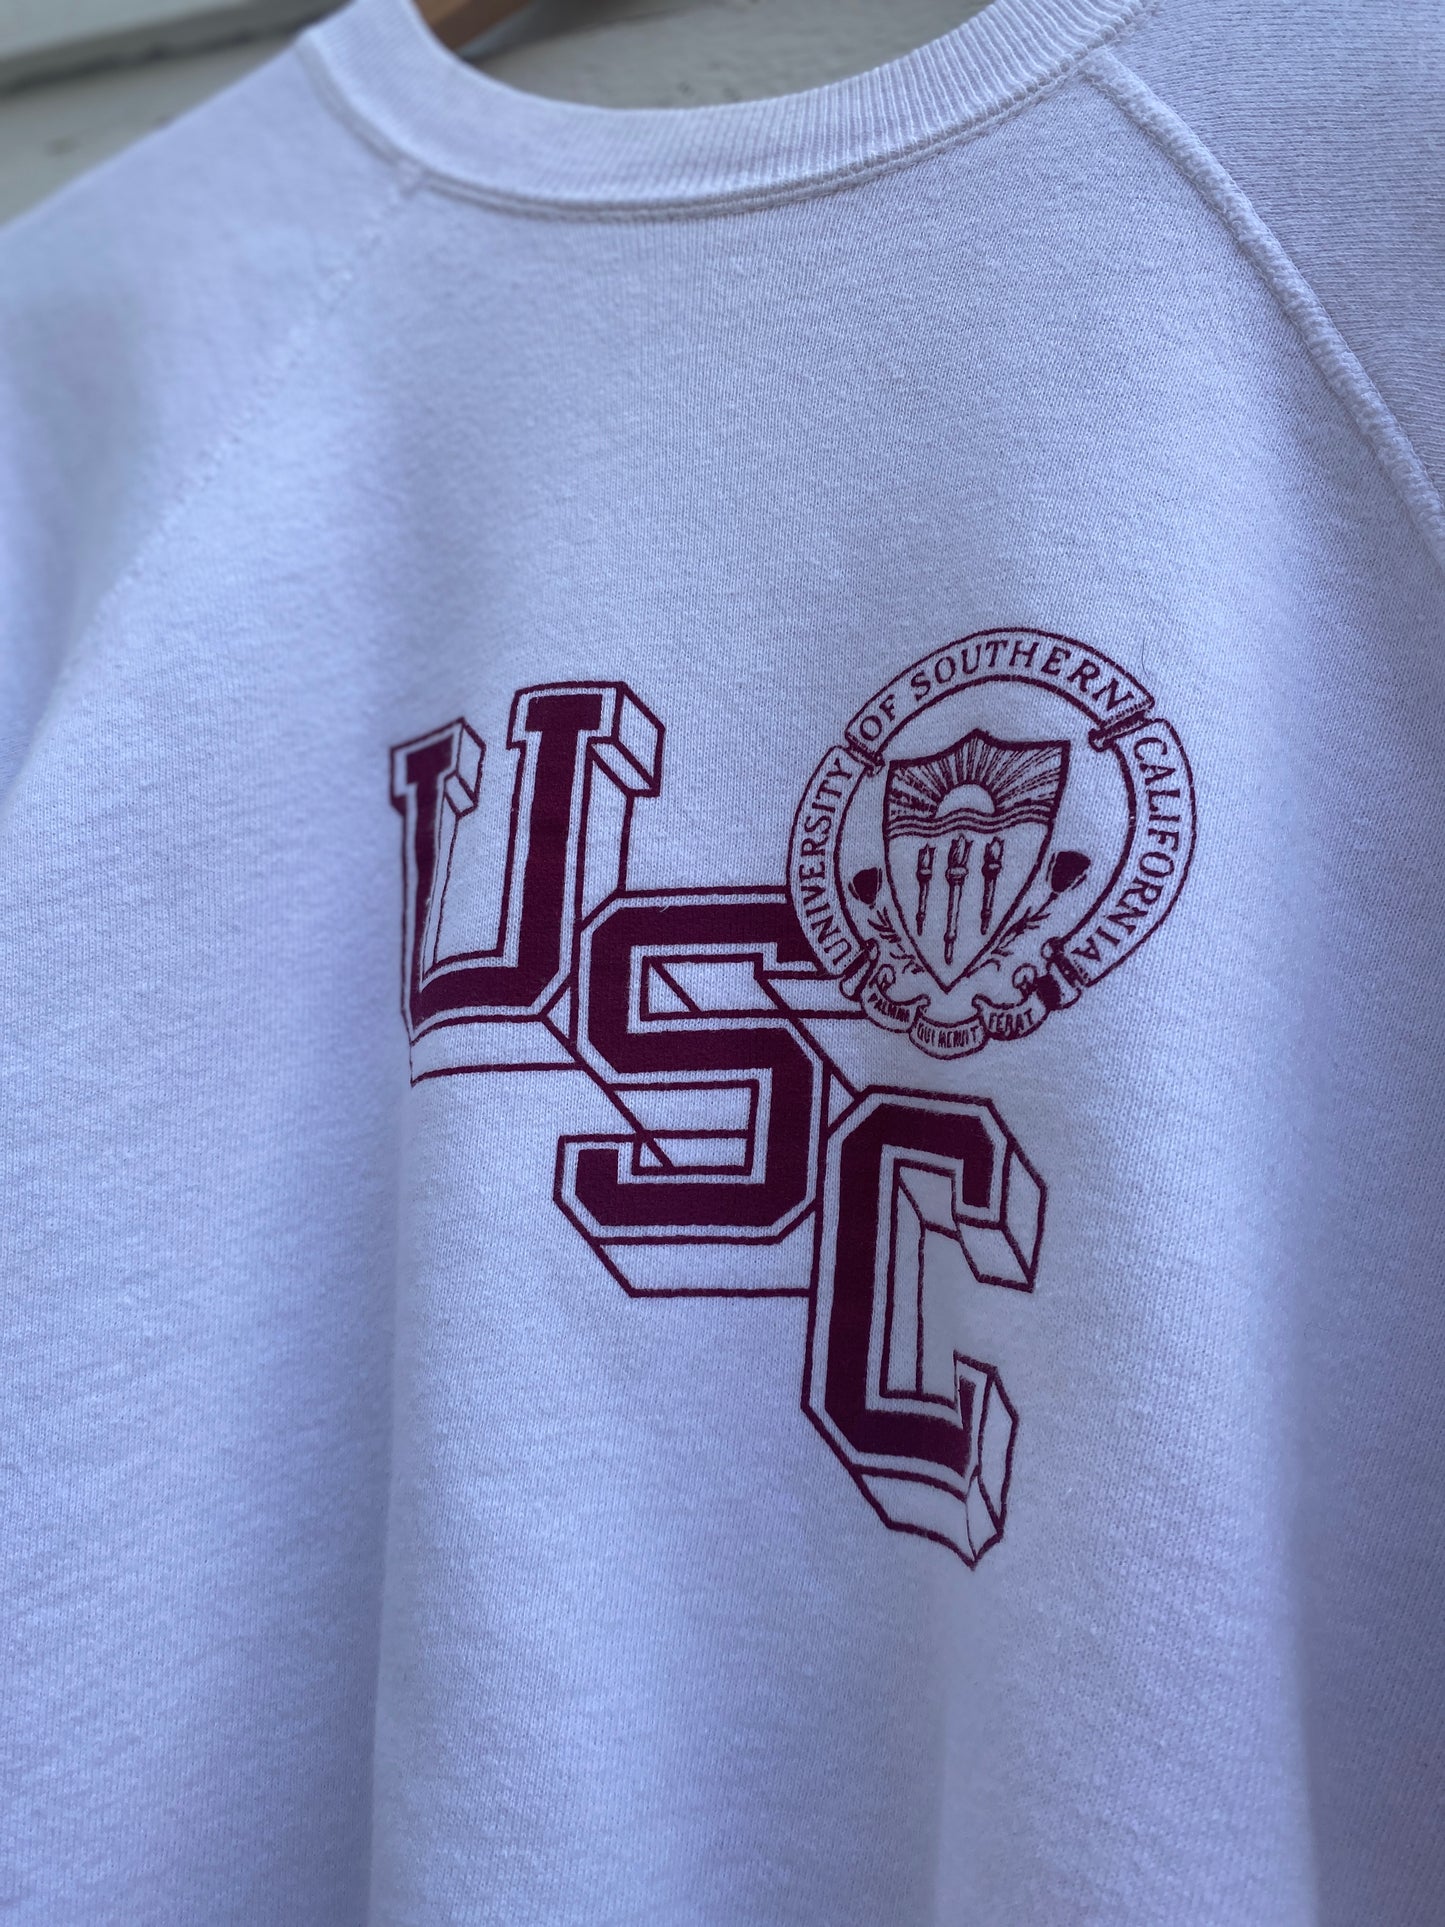 Vintage 1970s University Of Southern California Short Sleeve Sweatshirt Medium